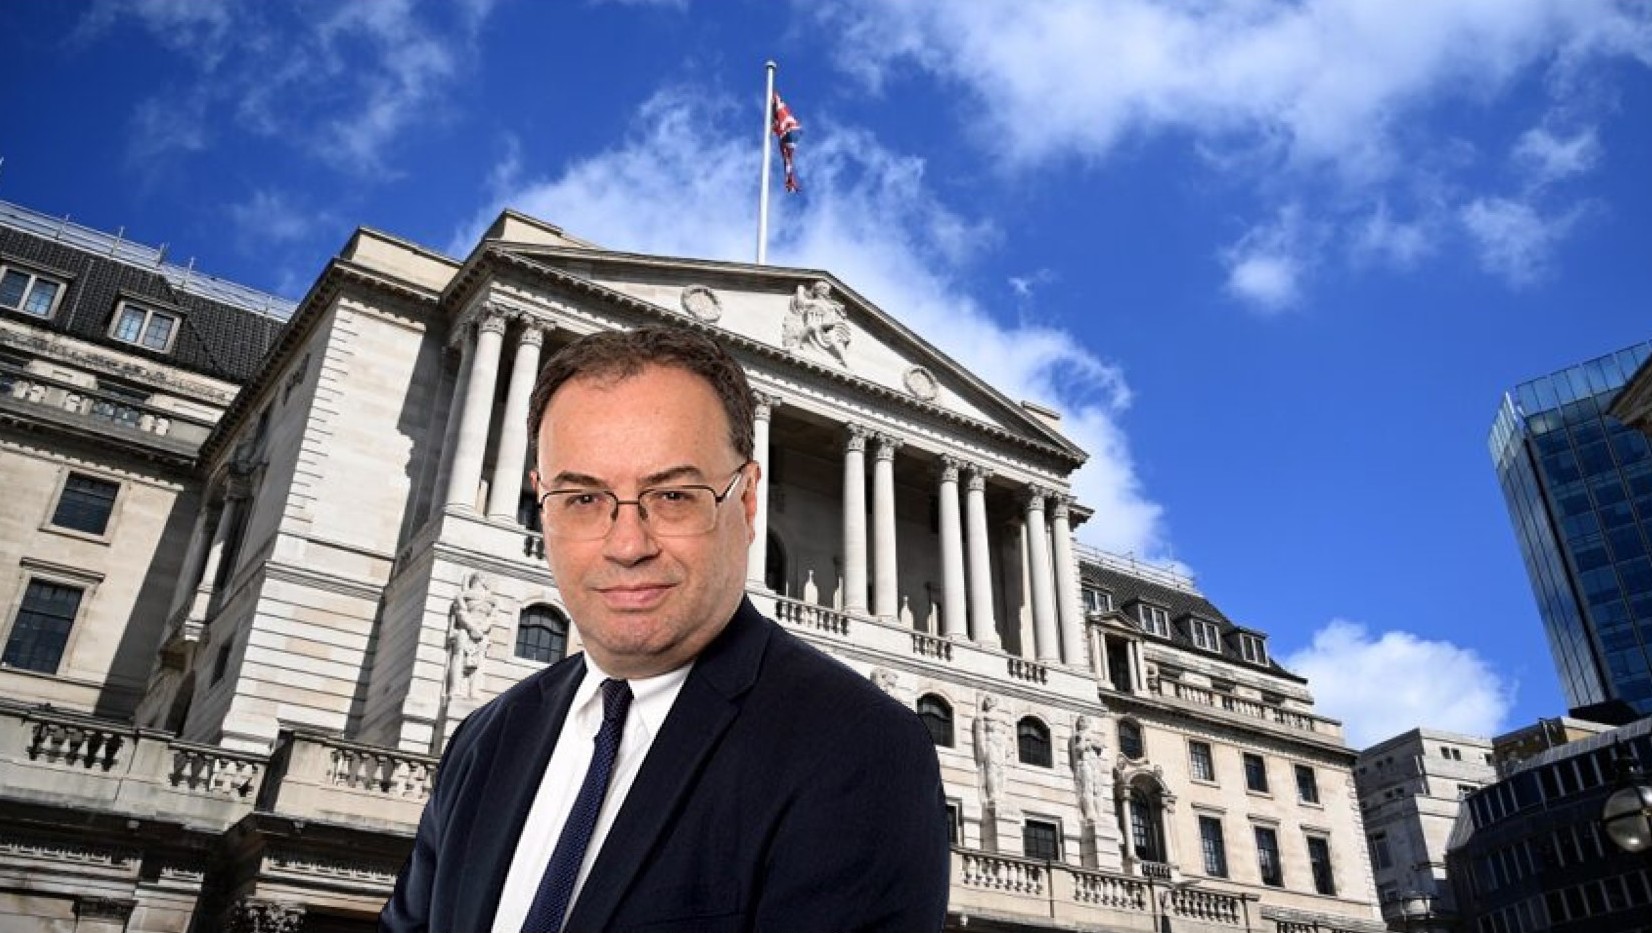 O Andrew Bailey, Διοικητής στην Τράπεζα της Αγγλίας ©EPA/ANDY RAIN/BANKOFENGLAND.CO.UK/POWERGAME.GR